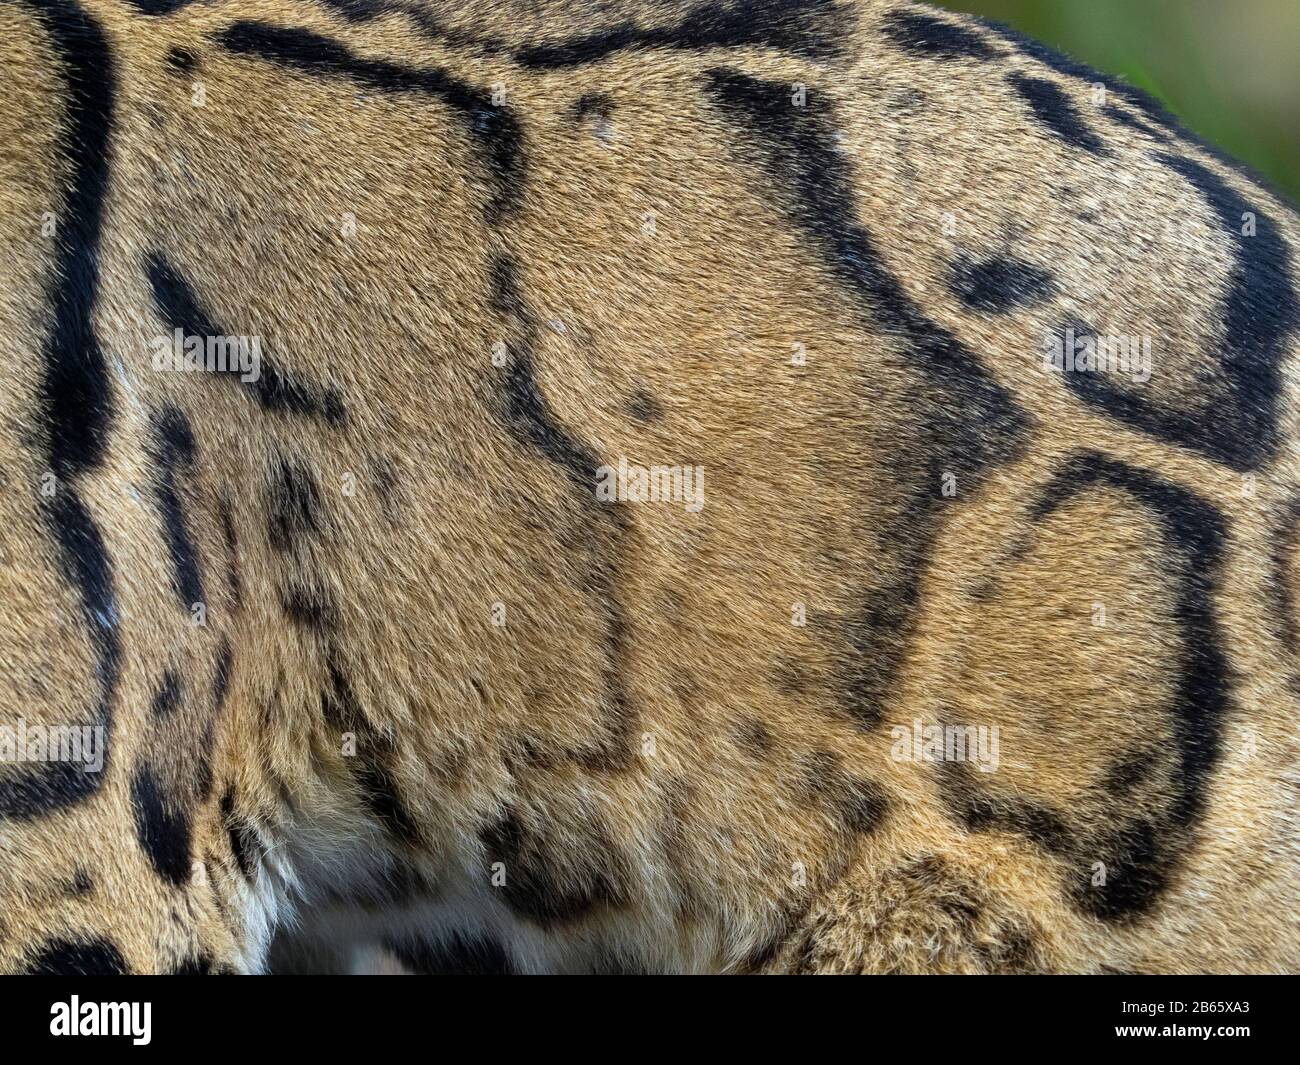 Clouded leopard Neofelis nebulosa showing coat colour and patterns Captive portrait Stock Photo